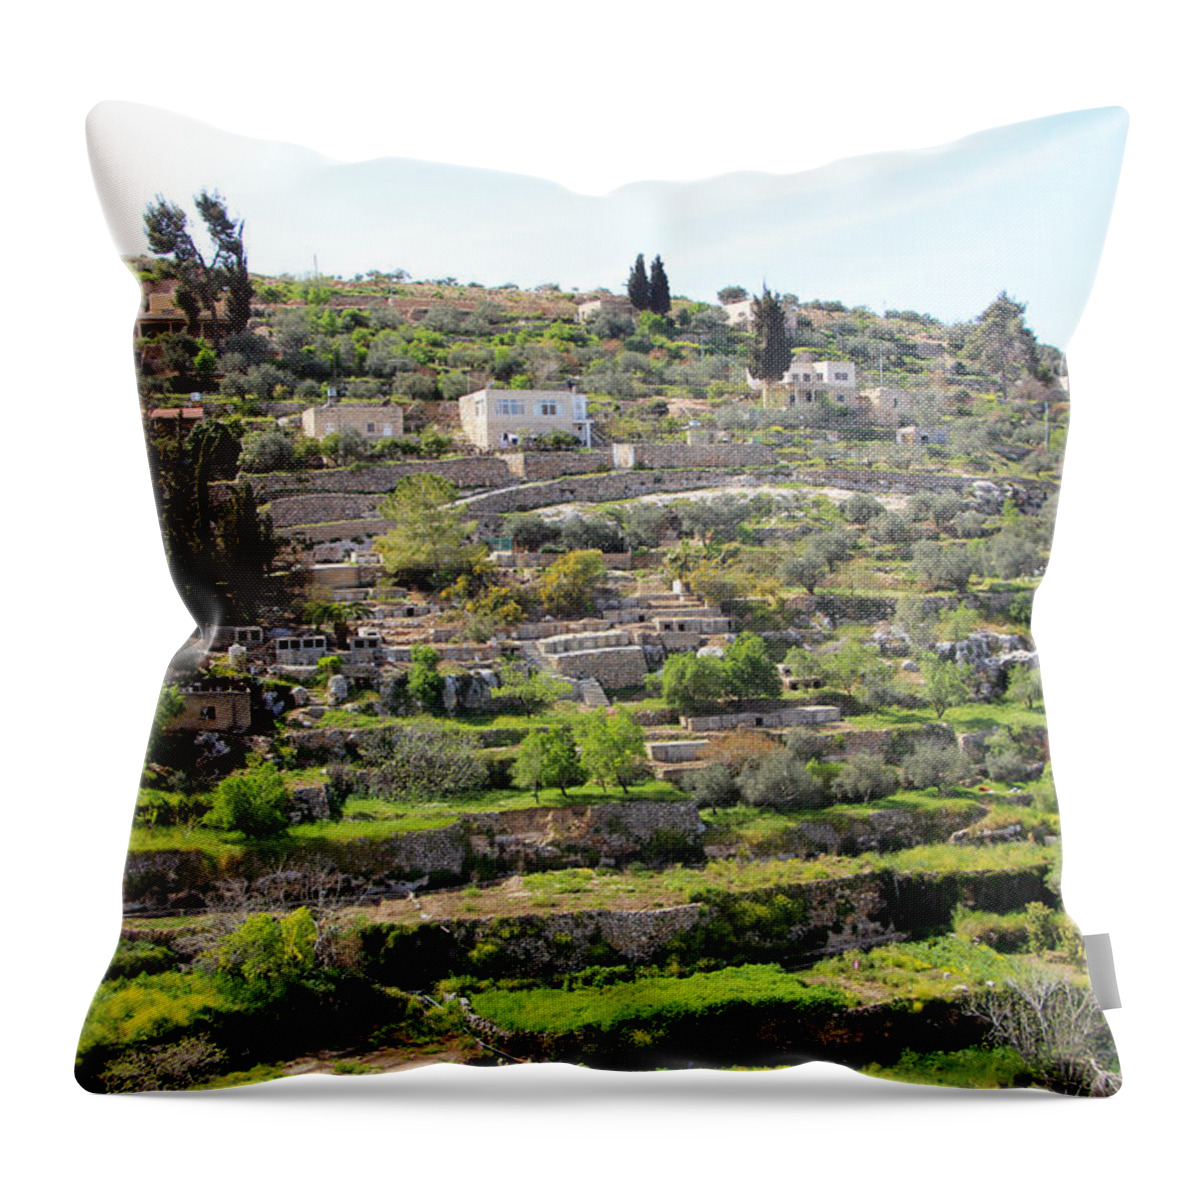 Battir Throw Pillow featuring the photograph The Village #1 by Munir Alawi